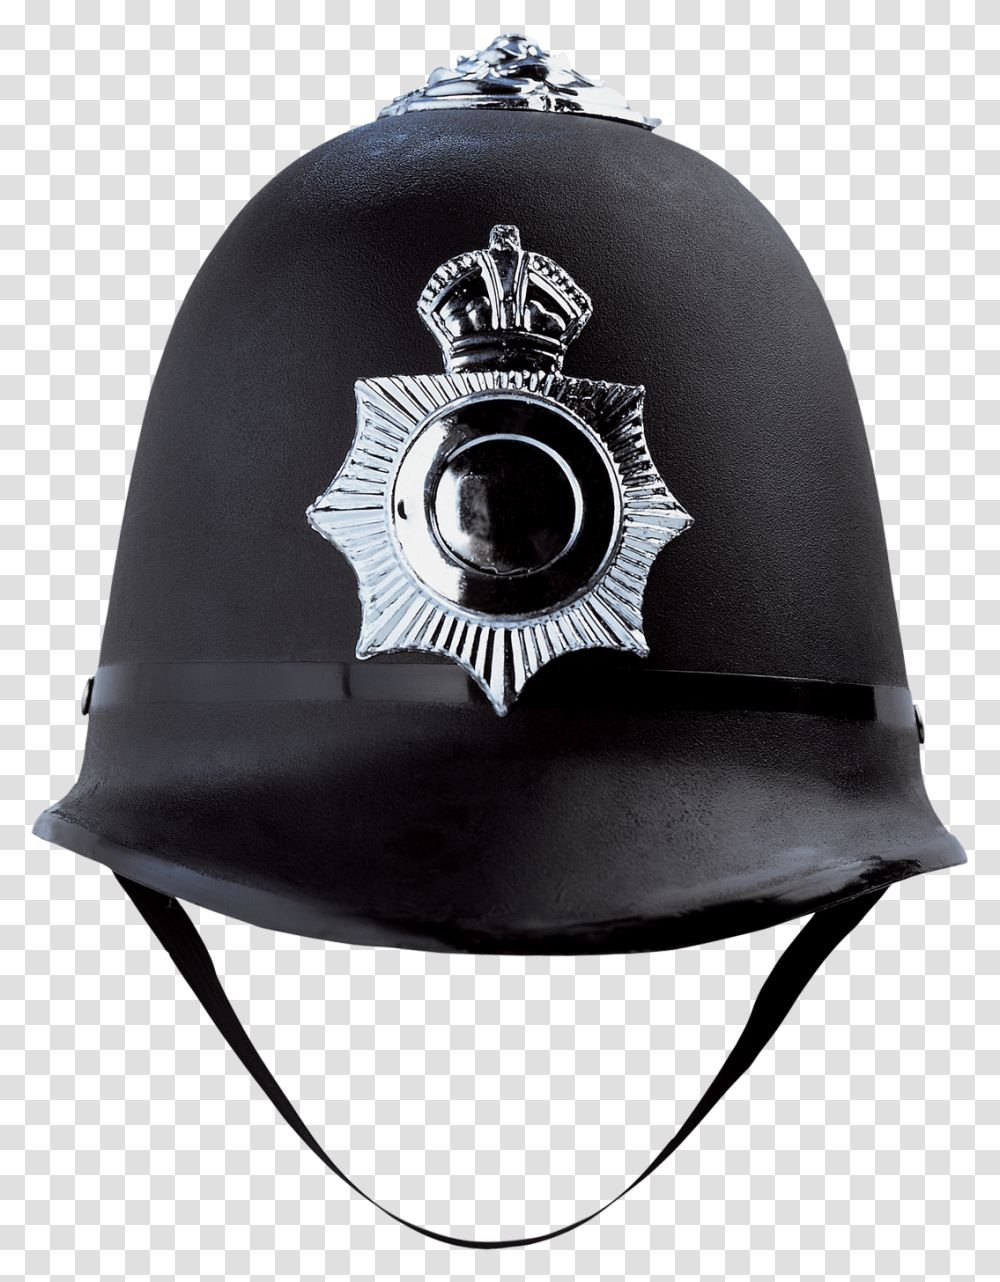 Police Free Image Police Helmet, Apparel, Hardhat, Baseball Cap Transparent Png